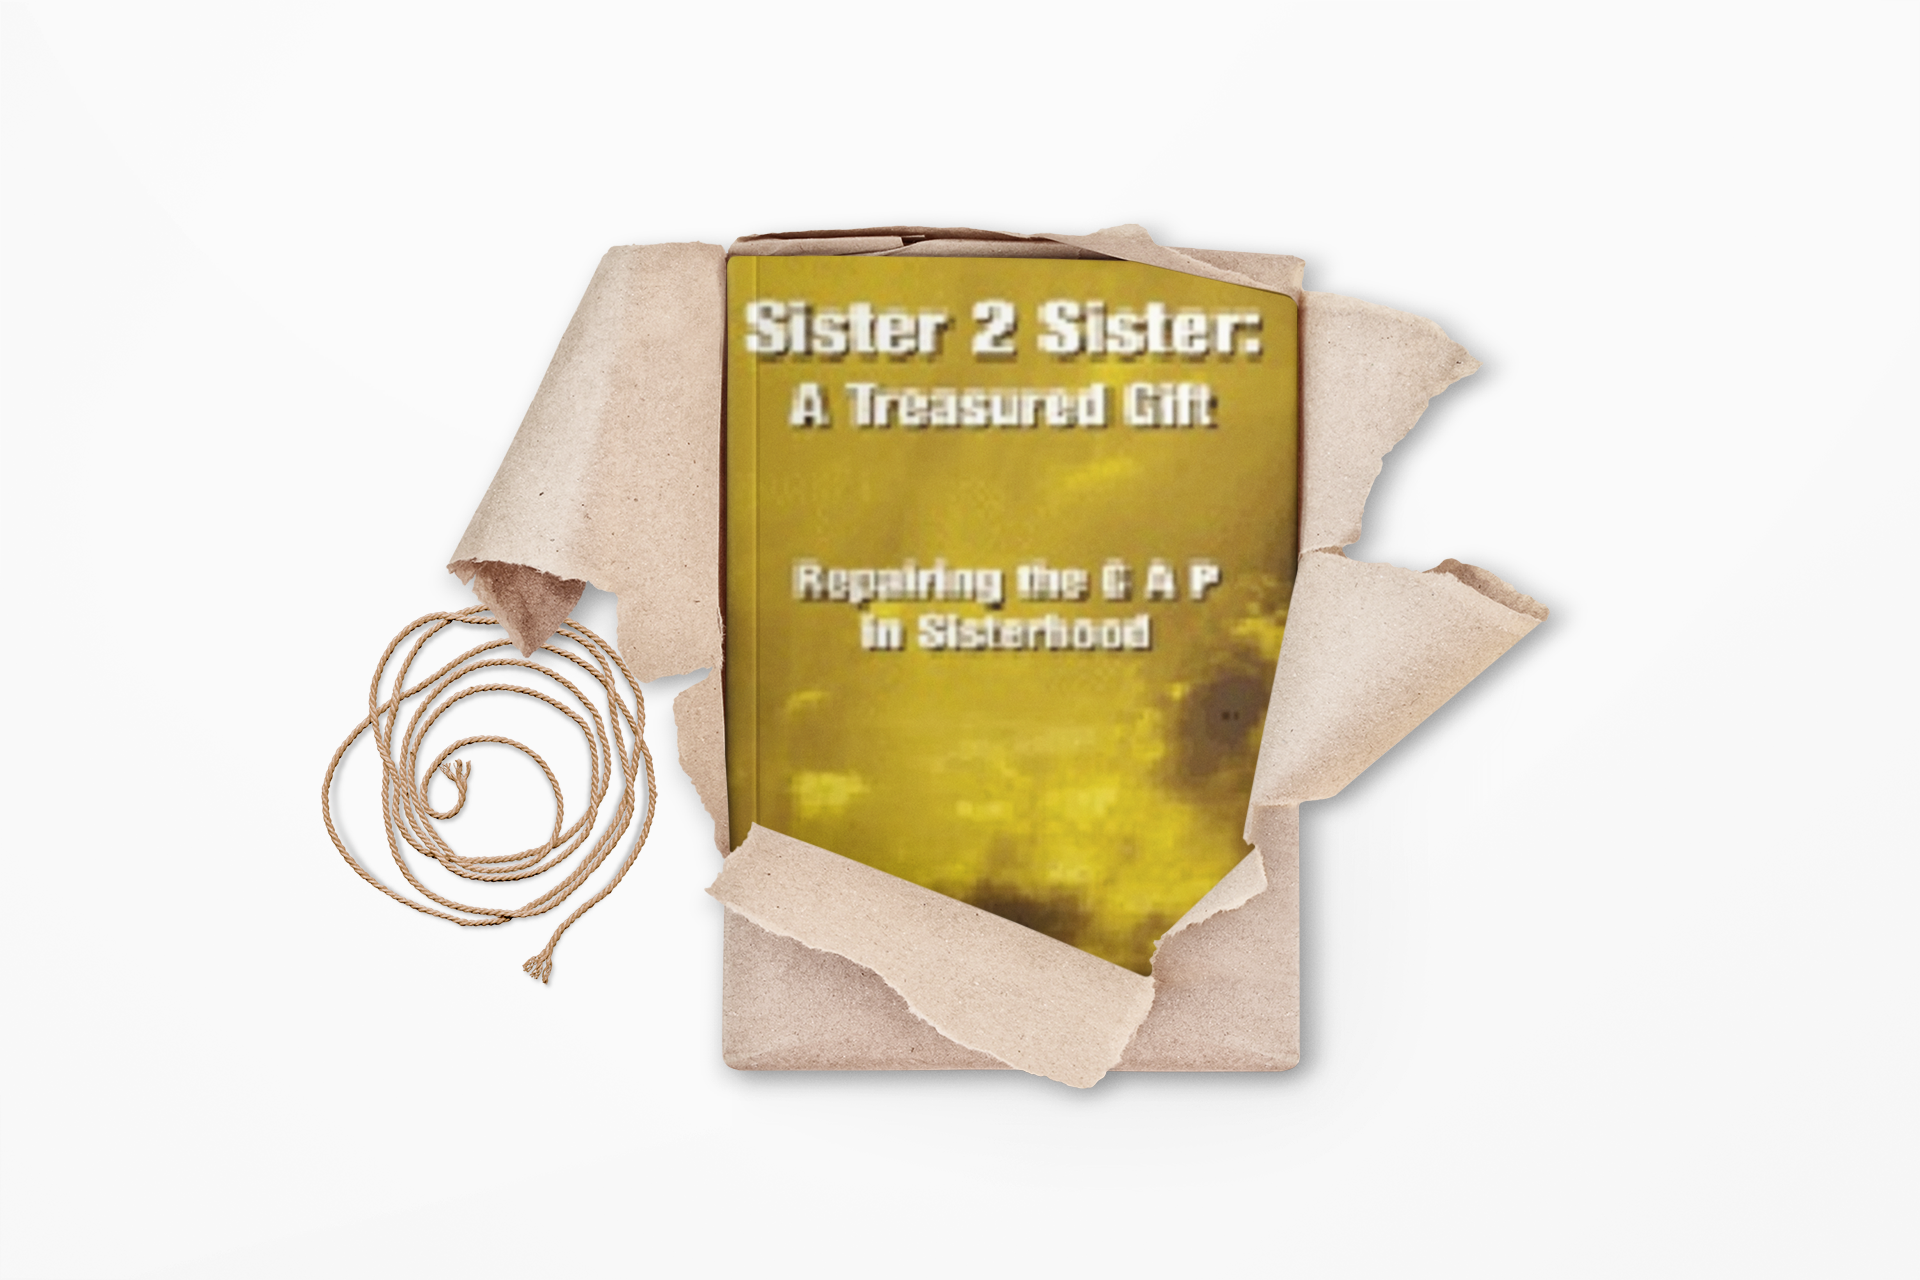 Sister 2 Sister: A Treasured Gift. Repairing the G A P in Sisterhood